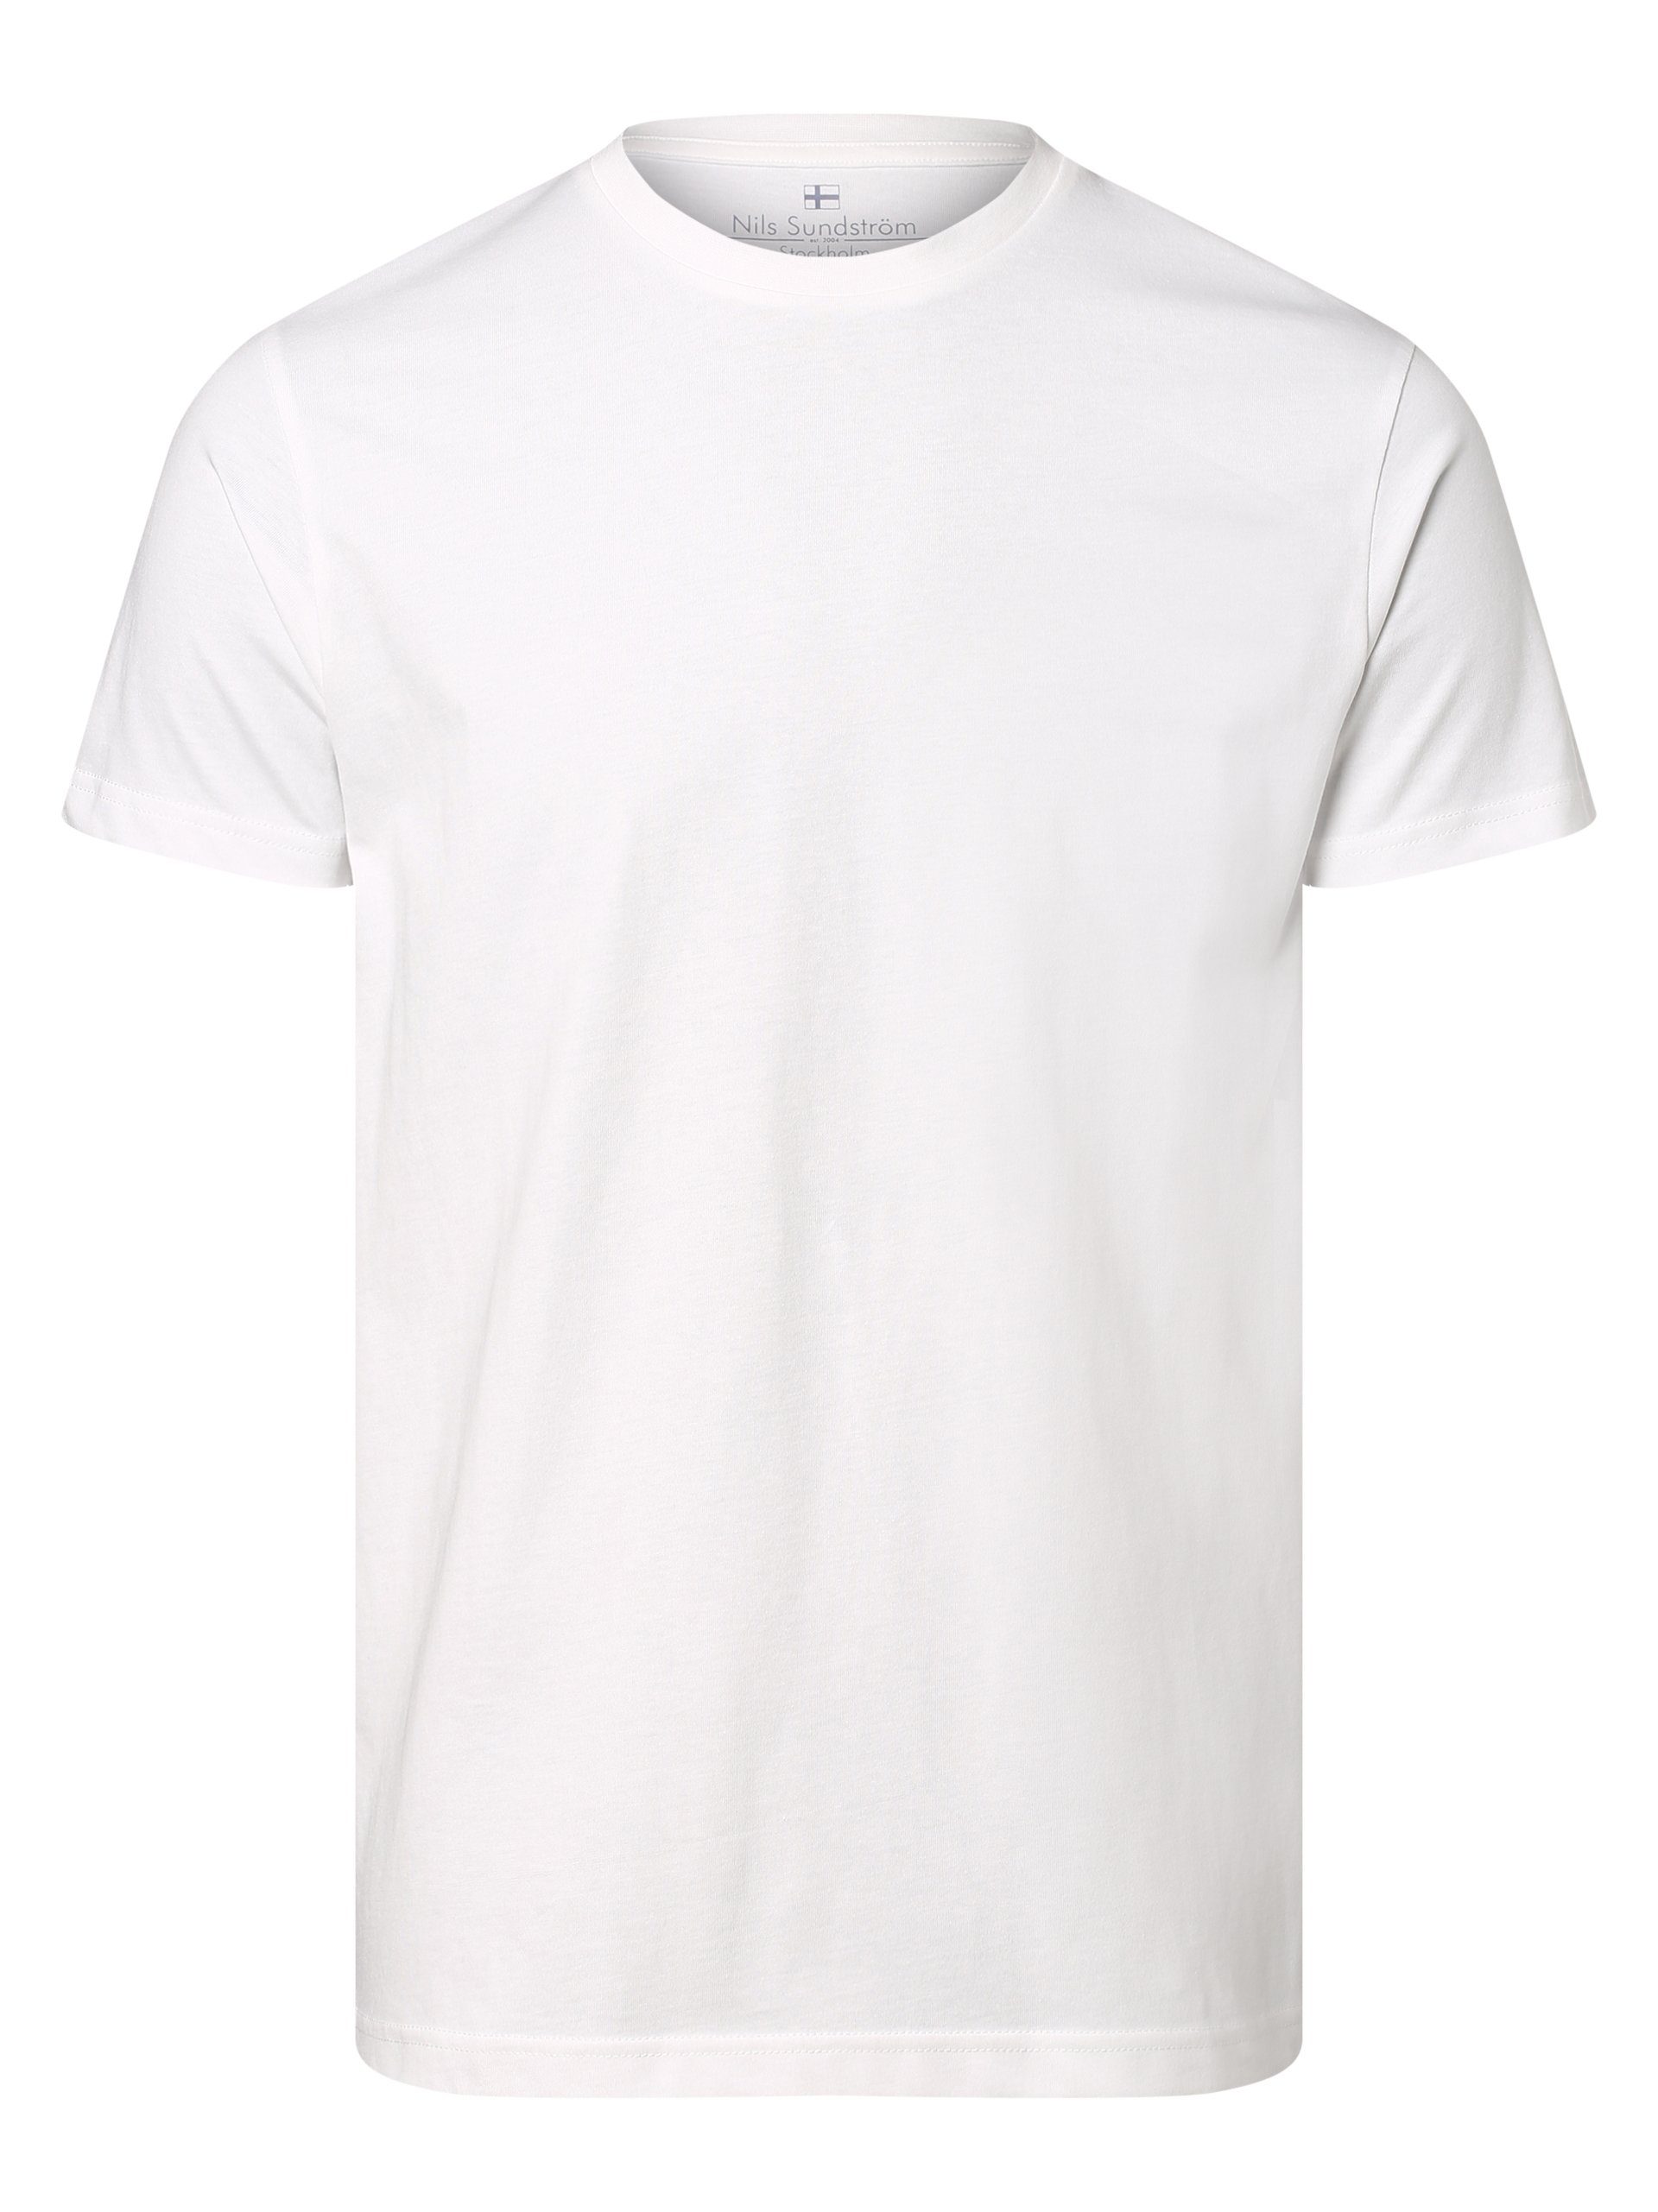 Nils Sundström T-Shirt weiß